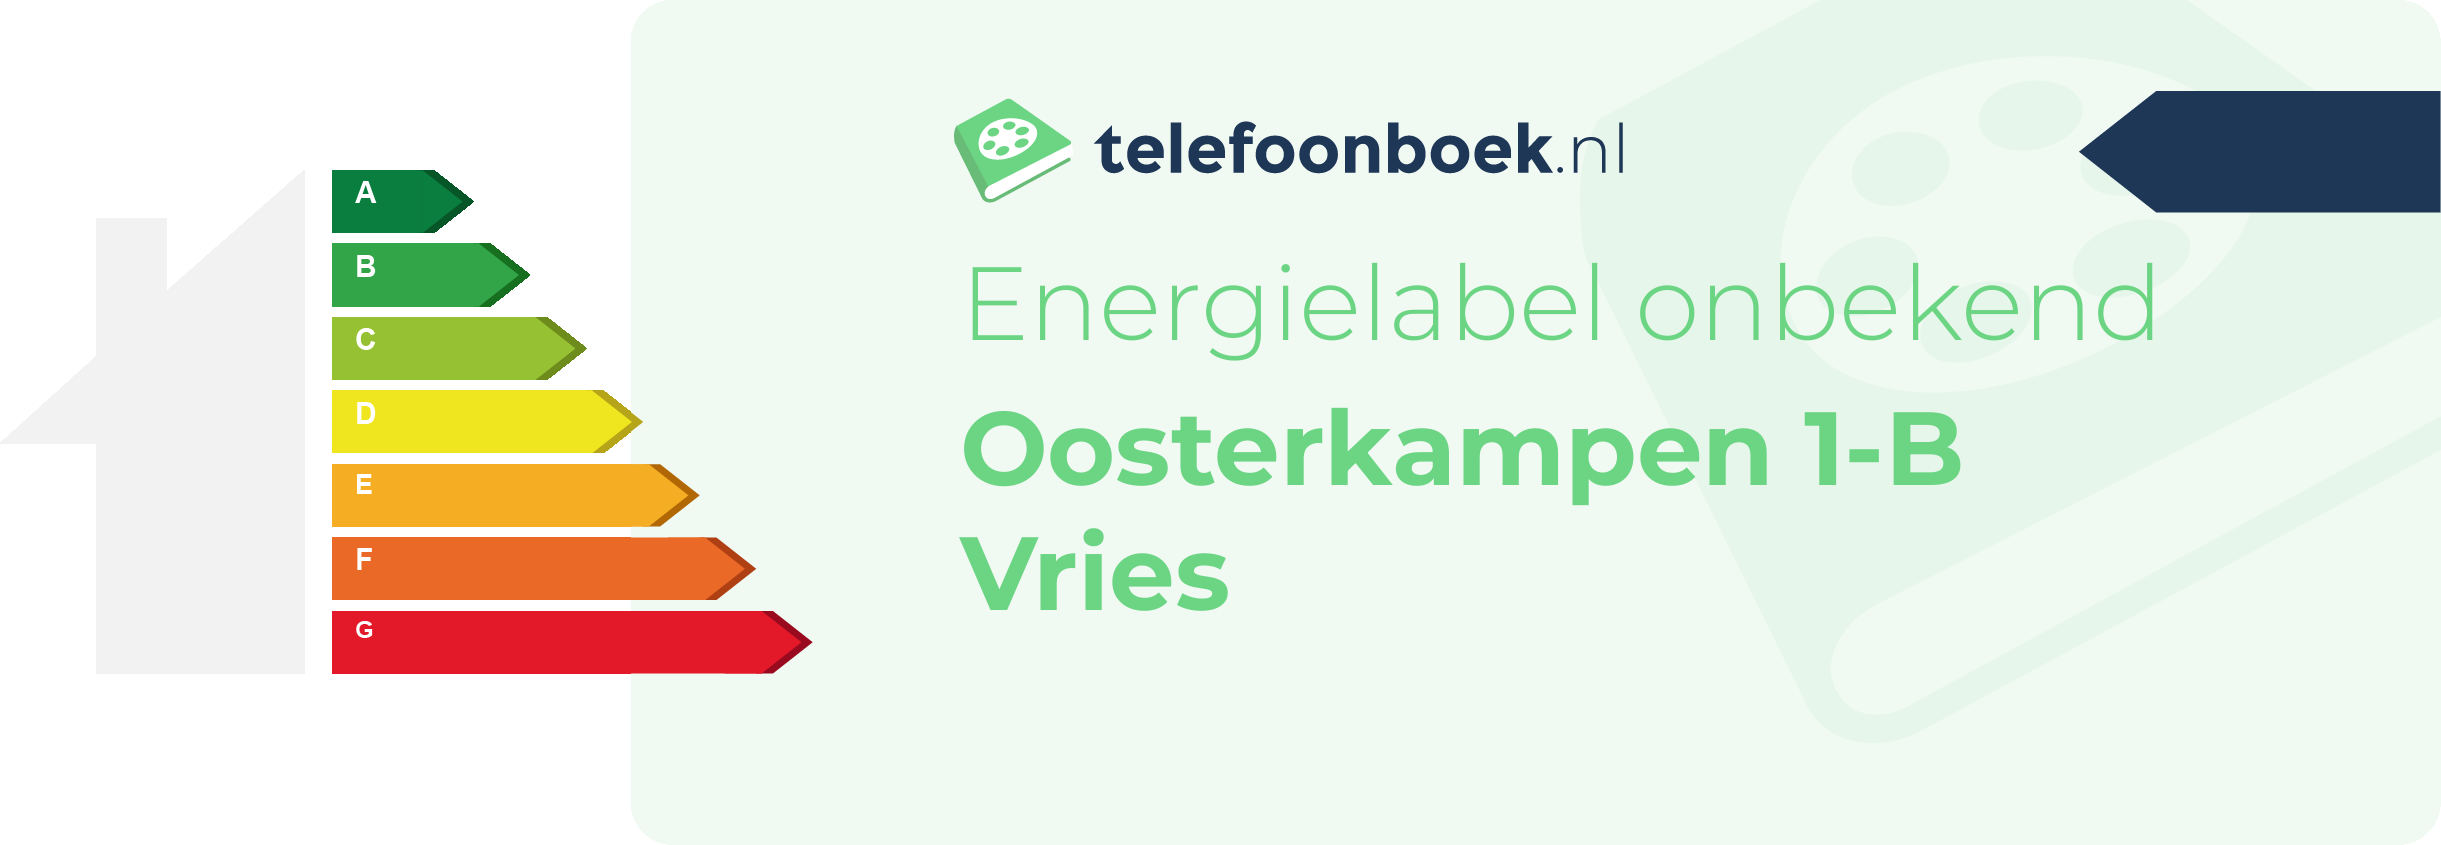 Energielabel Oosterkampen 1-B Vries